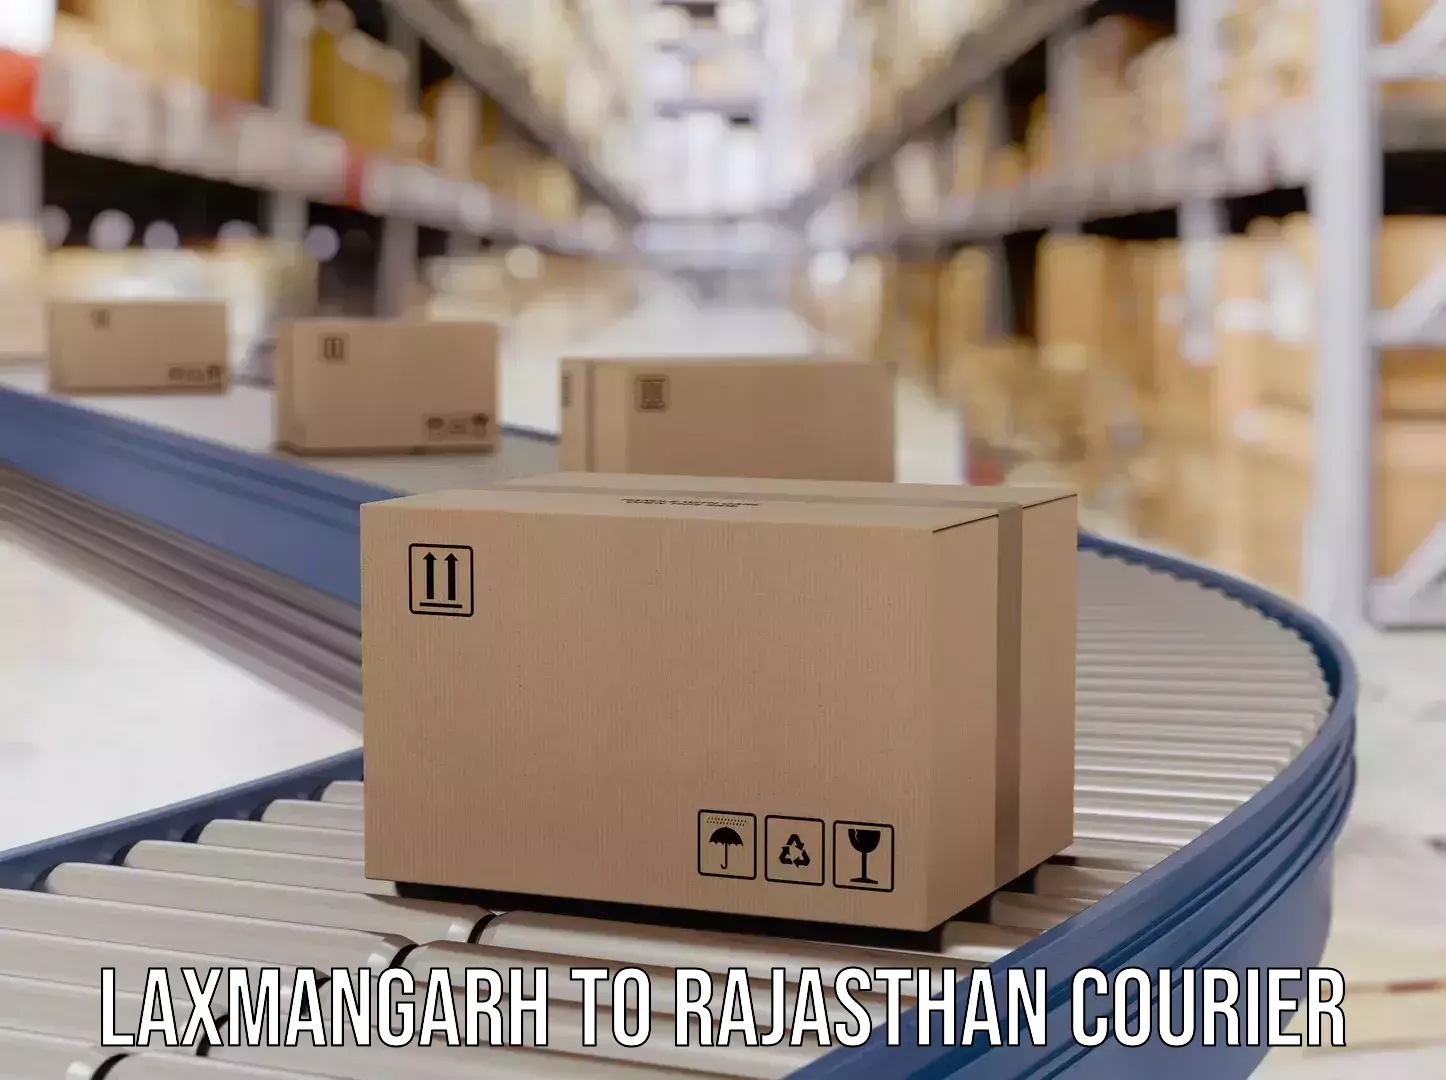 Courier service partnerships Laxmangarh to Banar